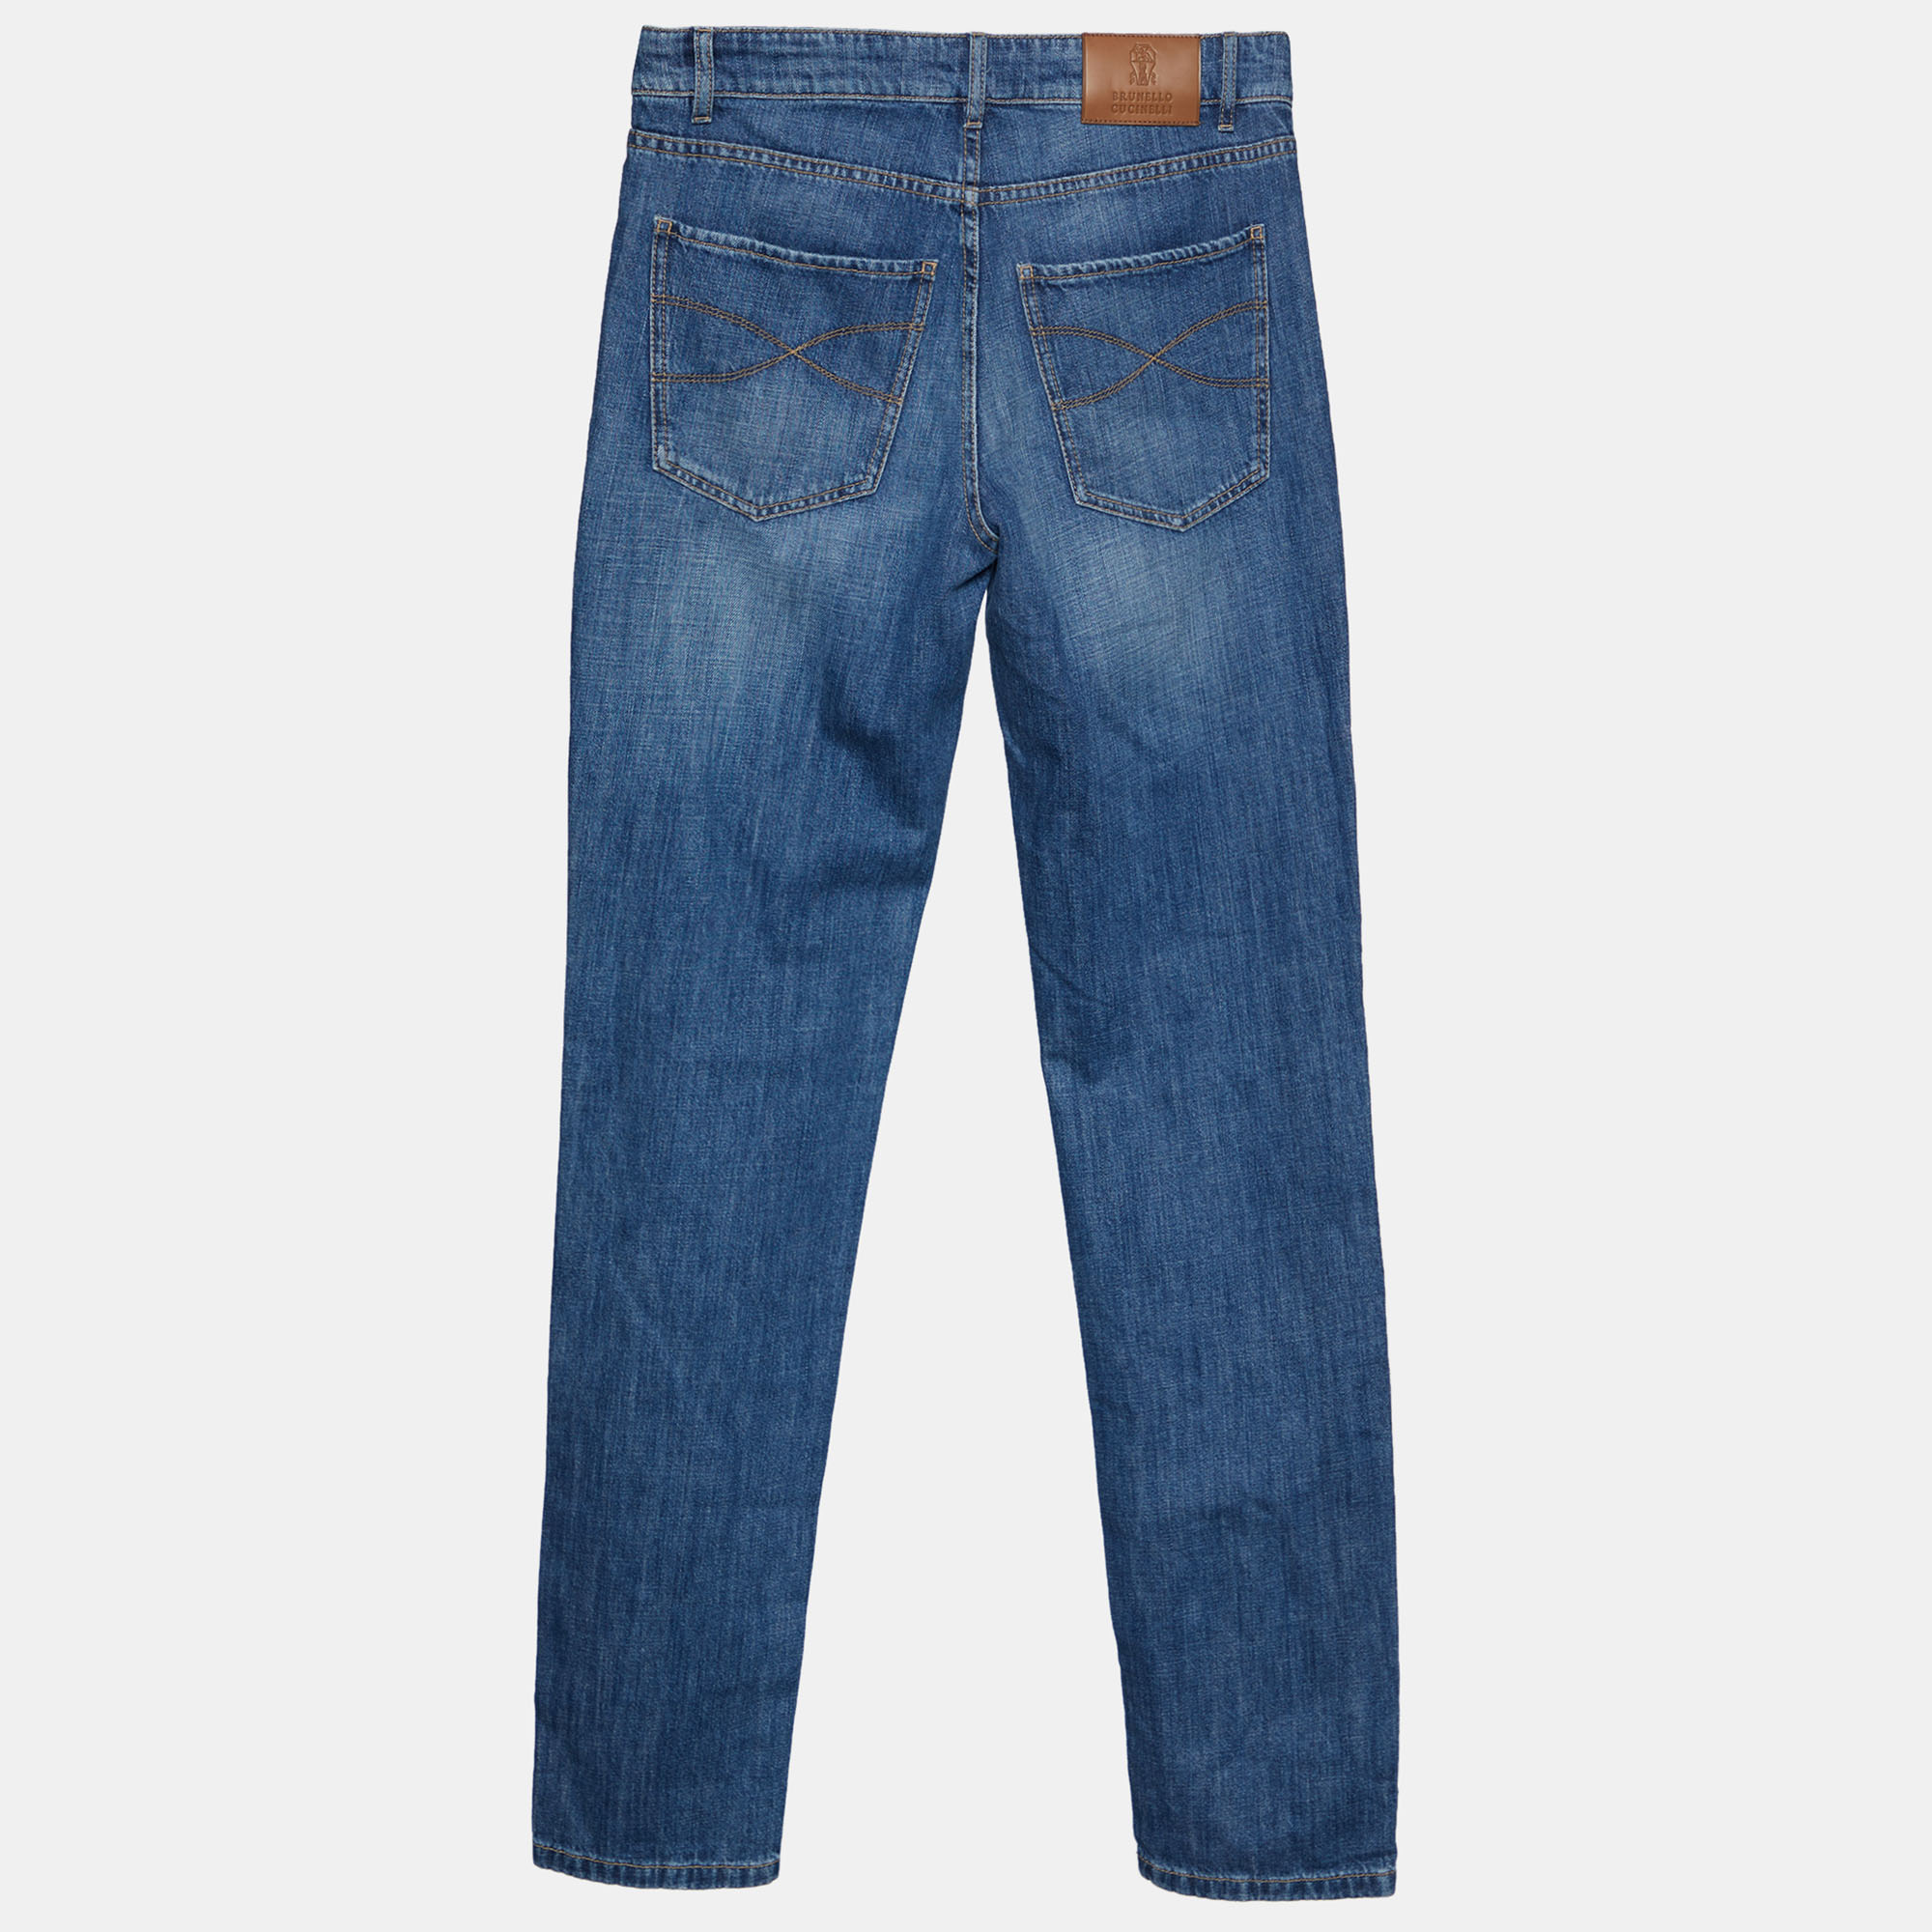 

Brunello Cucinelli Blue Denim Traditional Fit Jeans  Waist 32